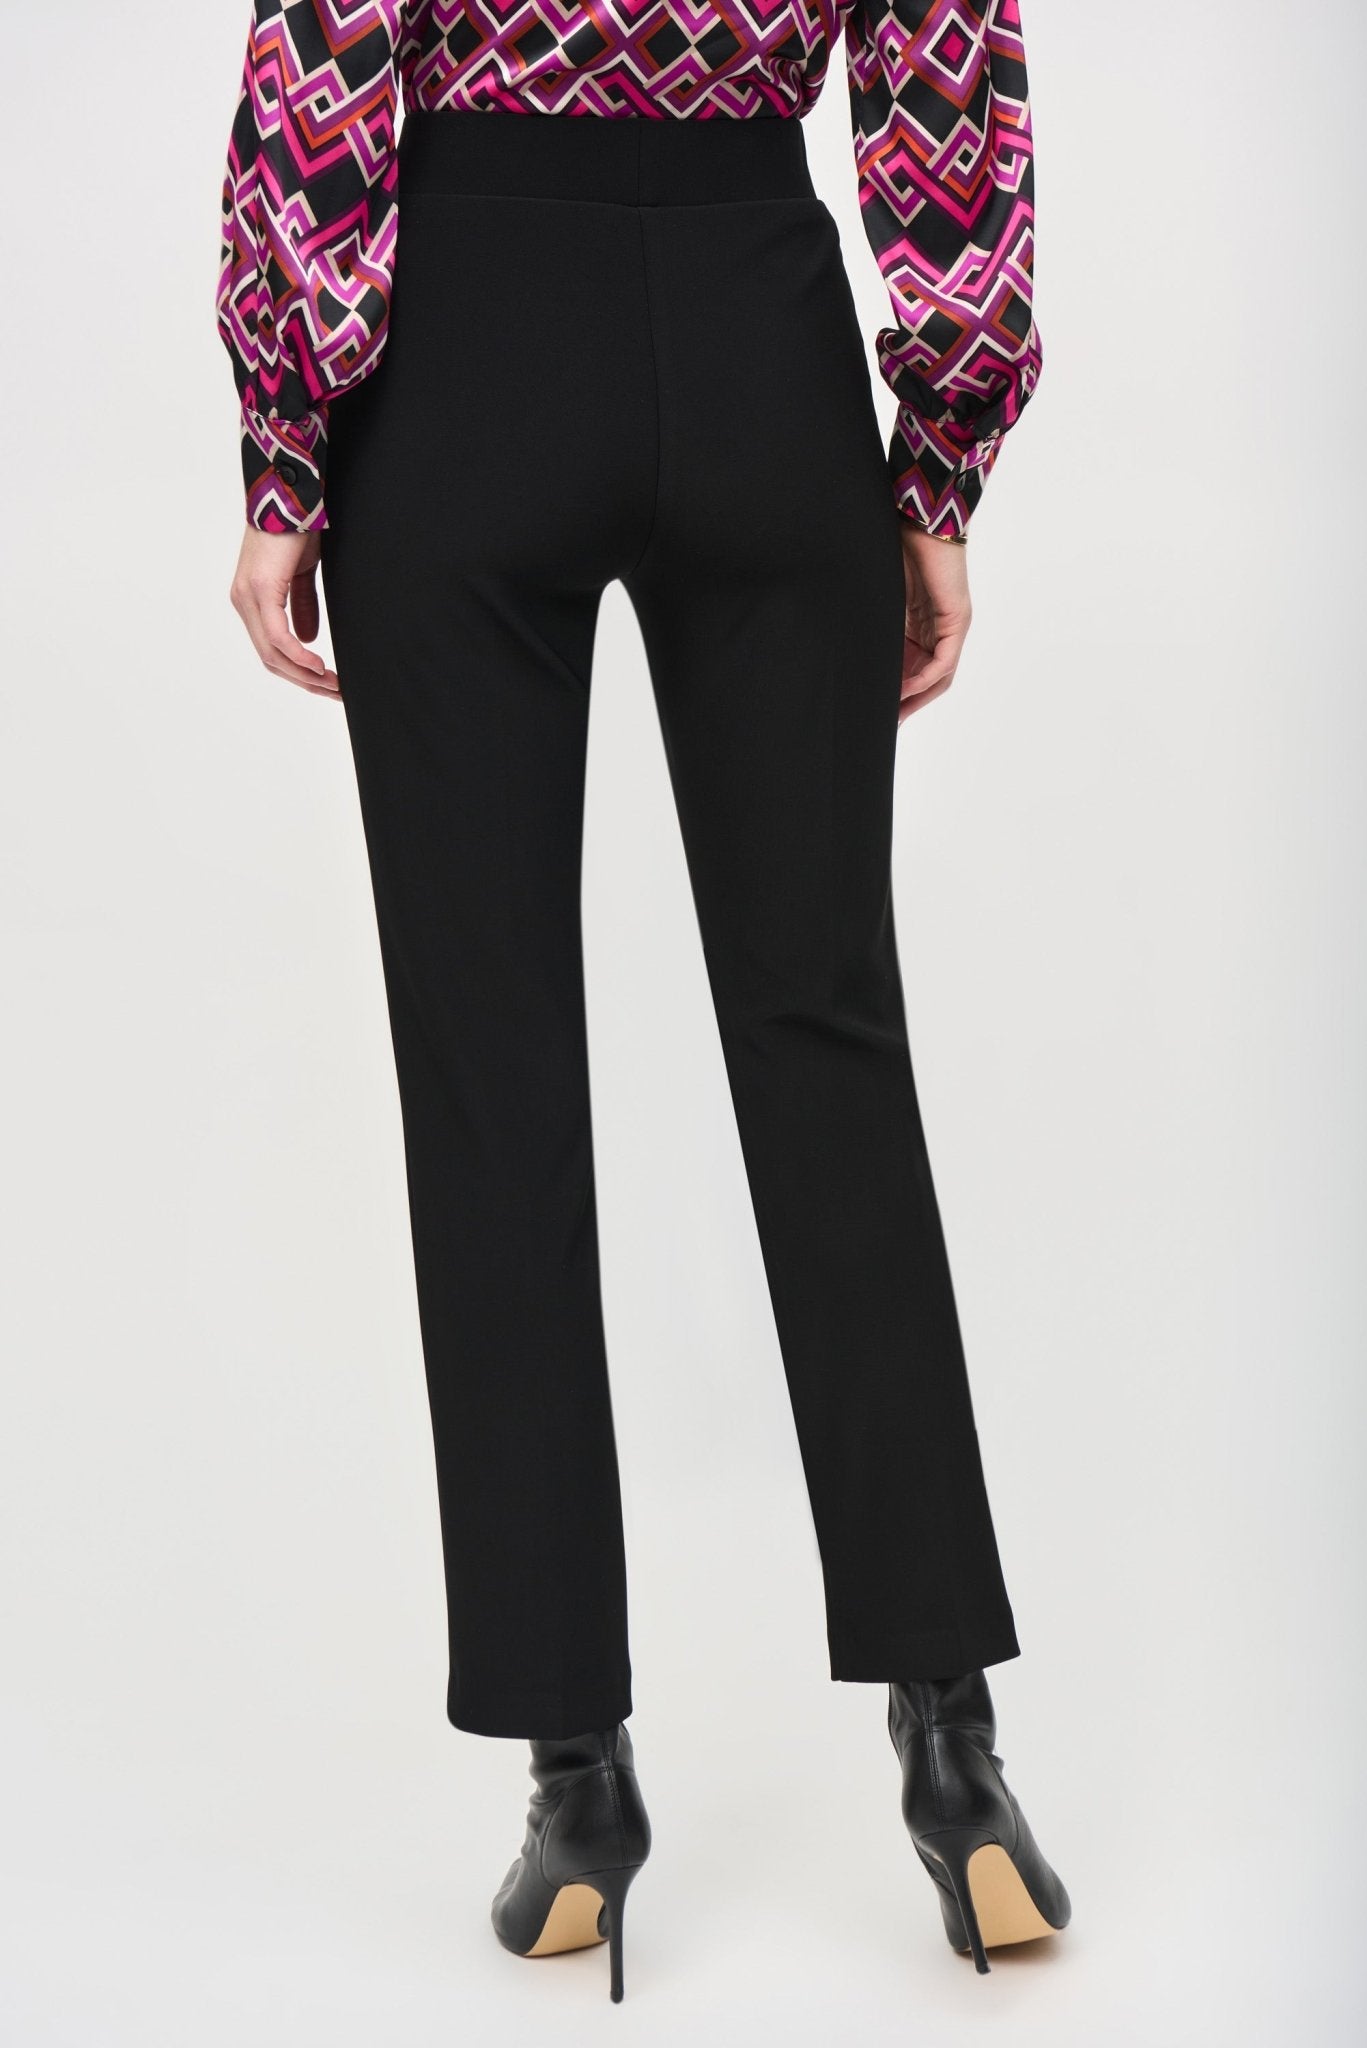 Shop PRE-ORDER Bonded Silky Knit Straight Pull-On Pants Style 243263 | Black - Joseph Ribkoff